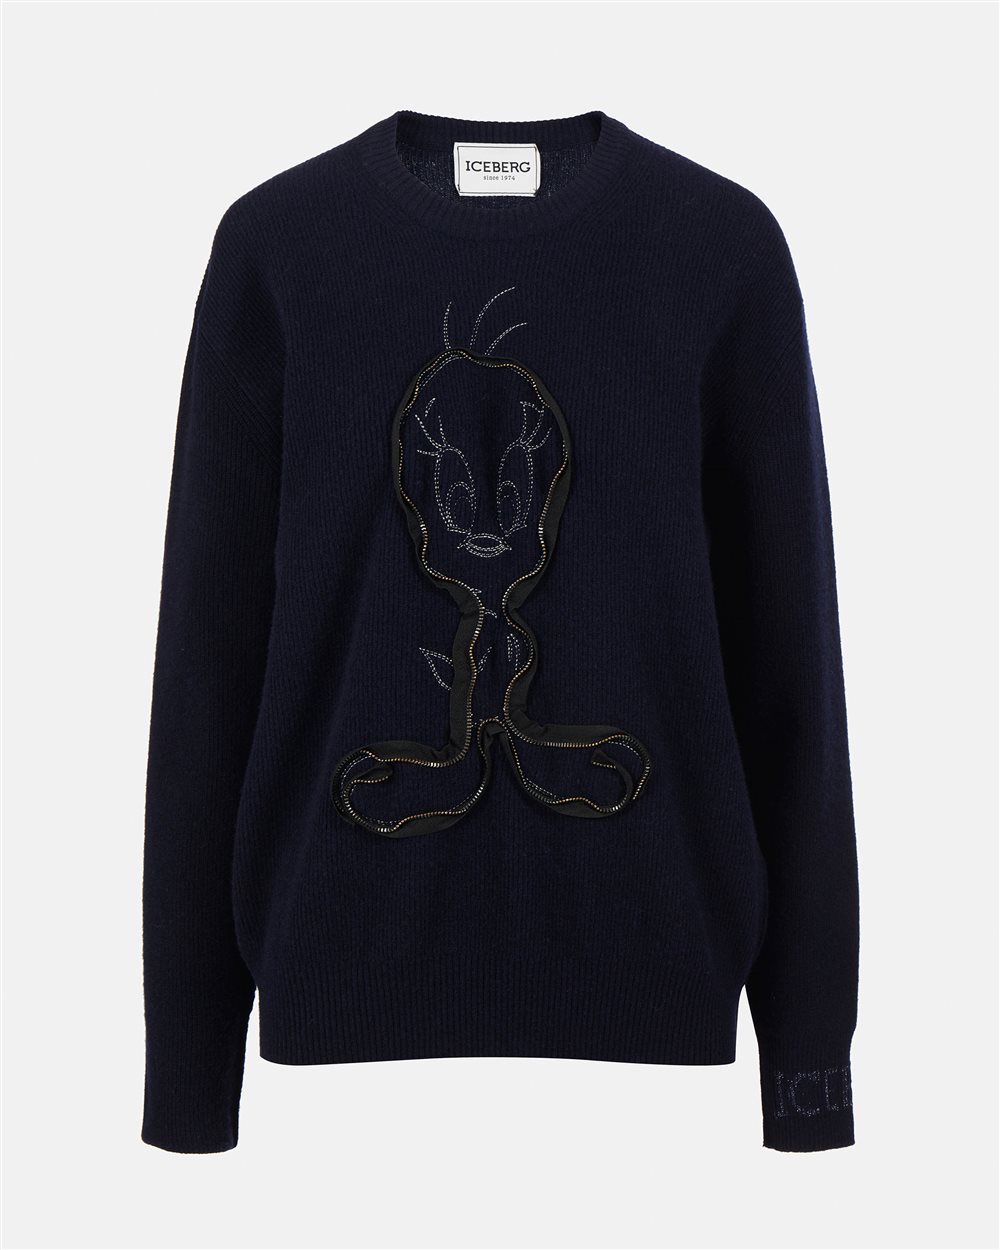 Crewneck sweater with cartoon detail - Iceberg - Official Website